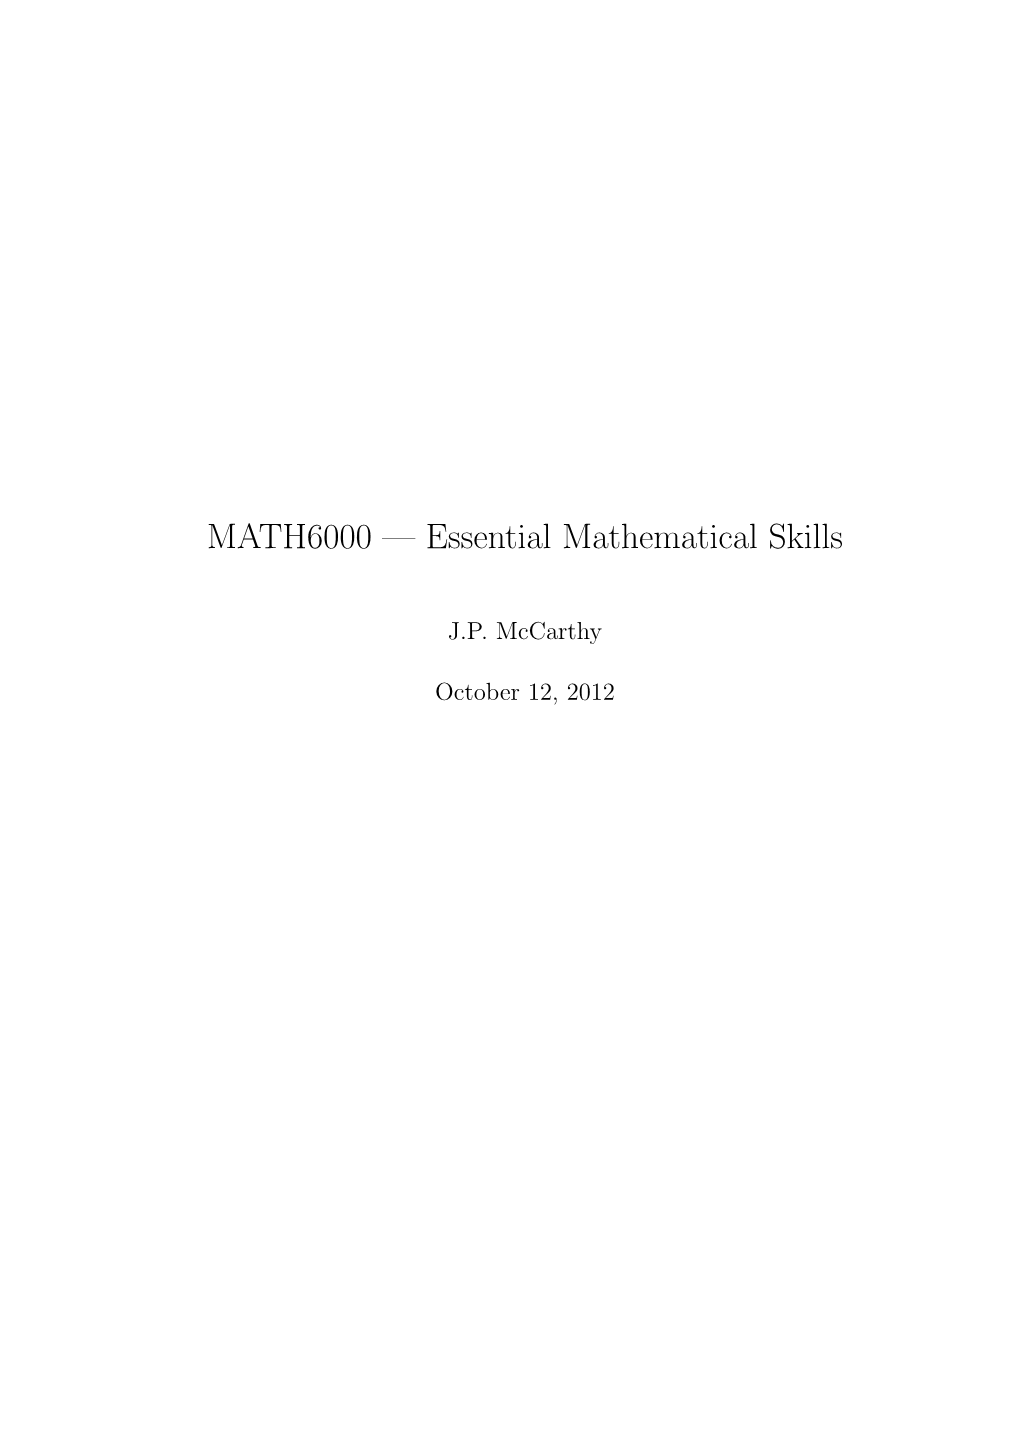 Essential Mathematical Skills